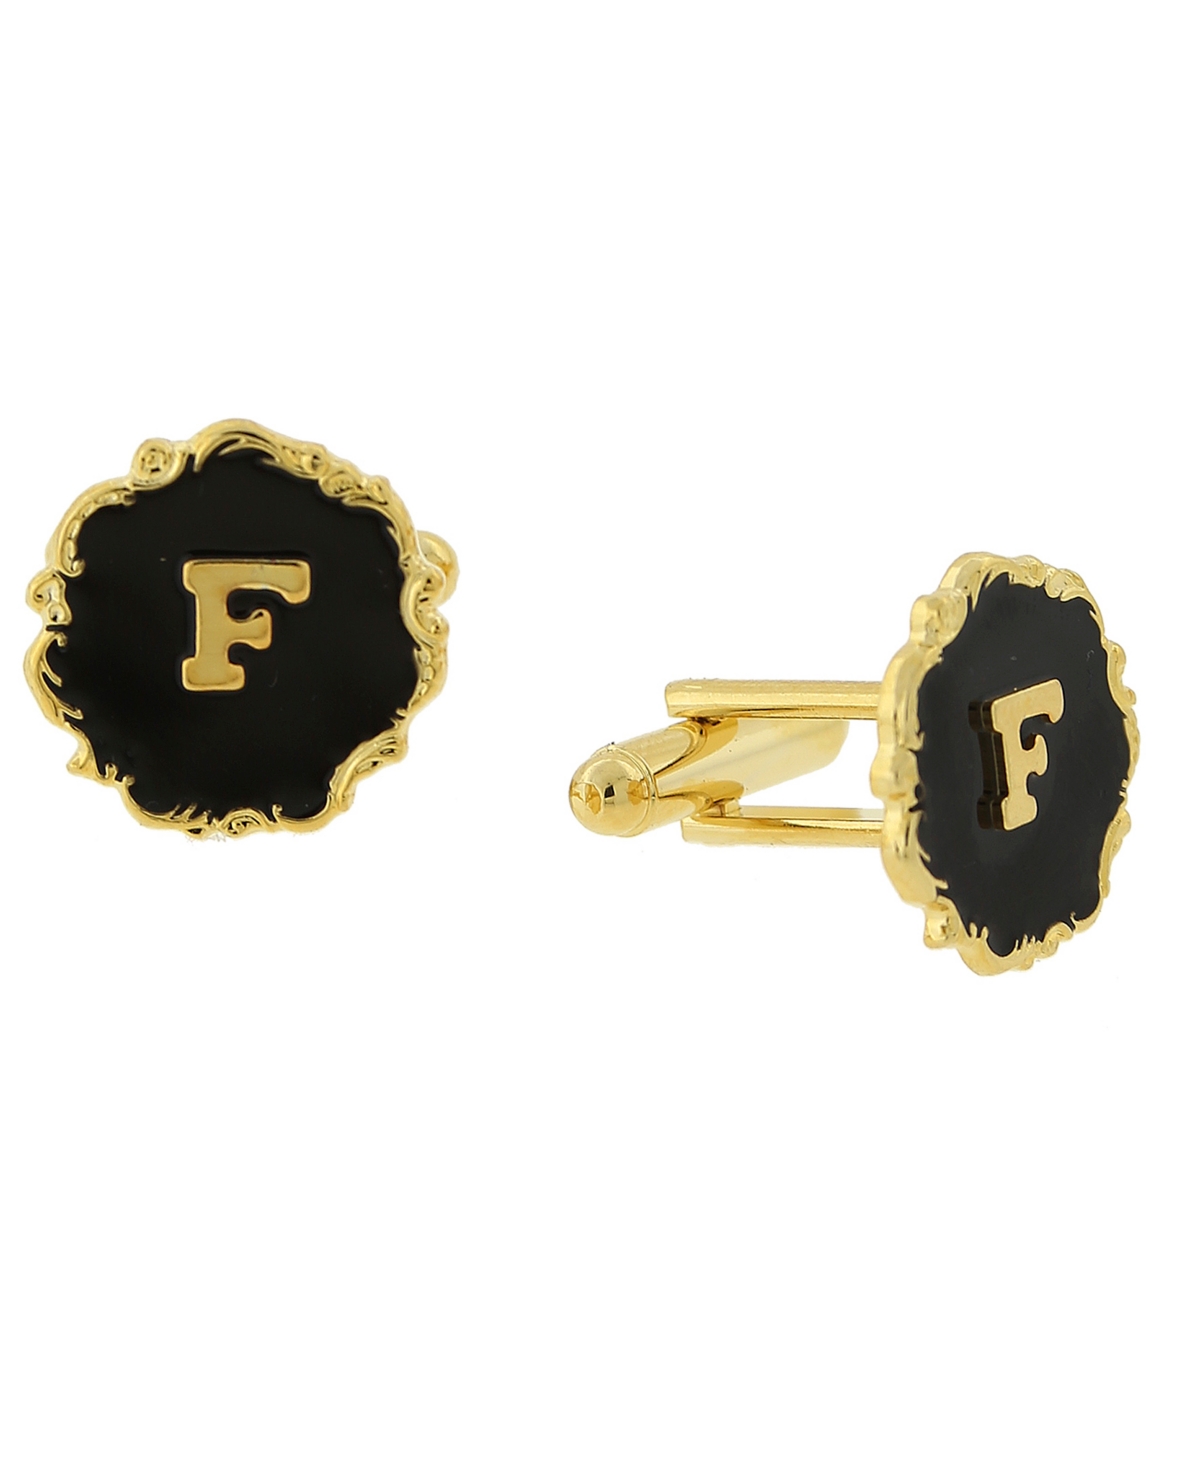 Jewelry 14K Gold-Plated Enamel Initial F Cufflinks - Black